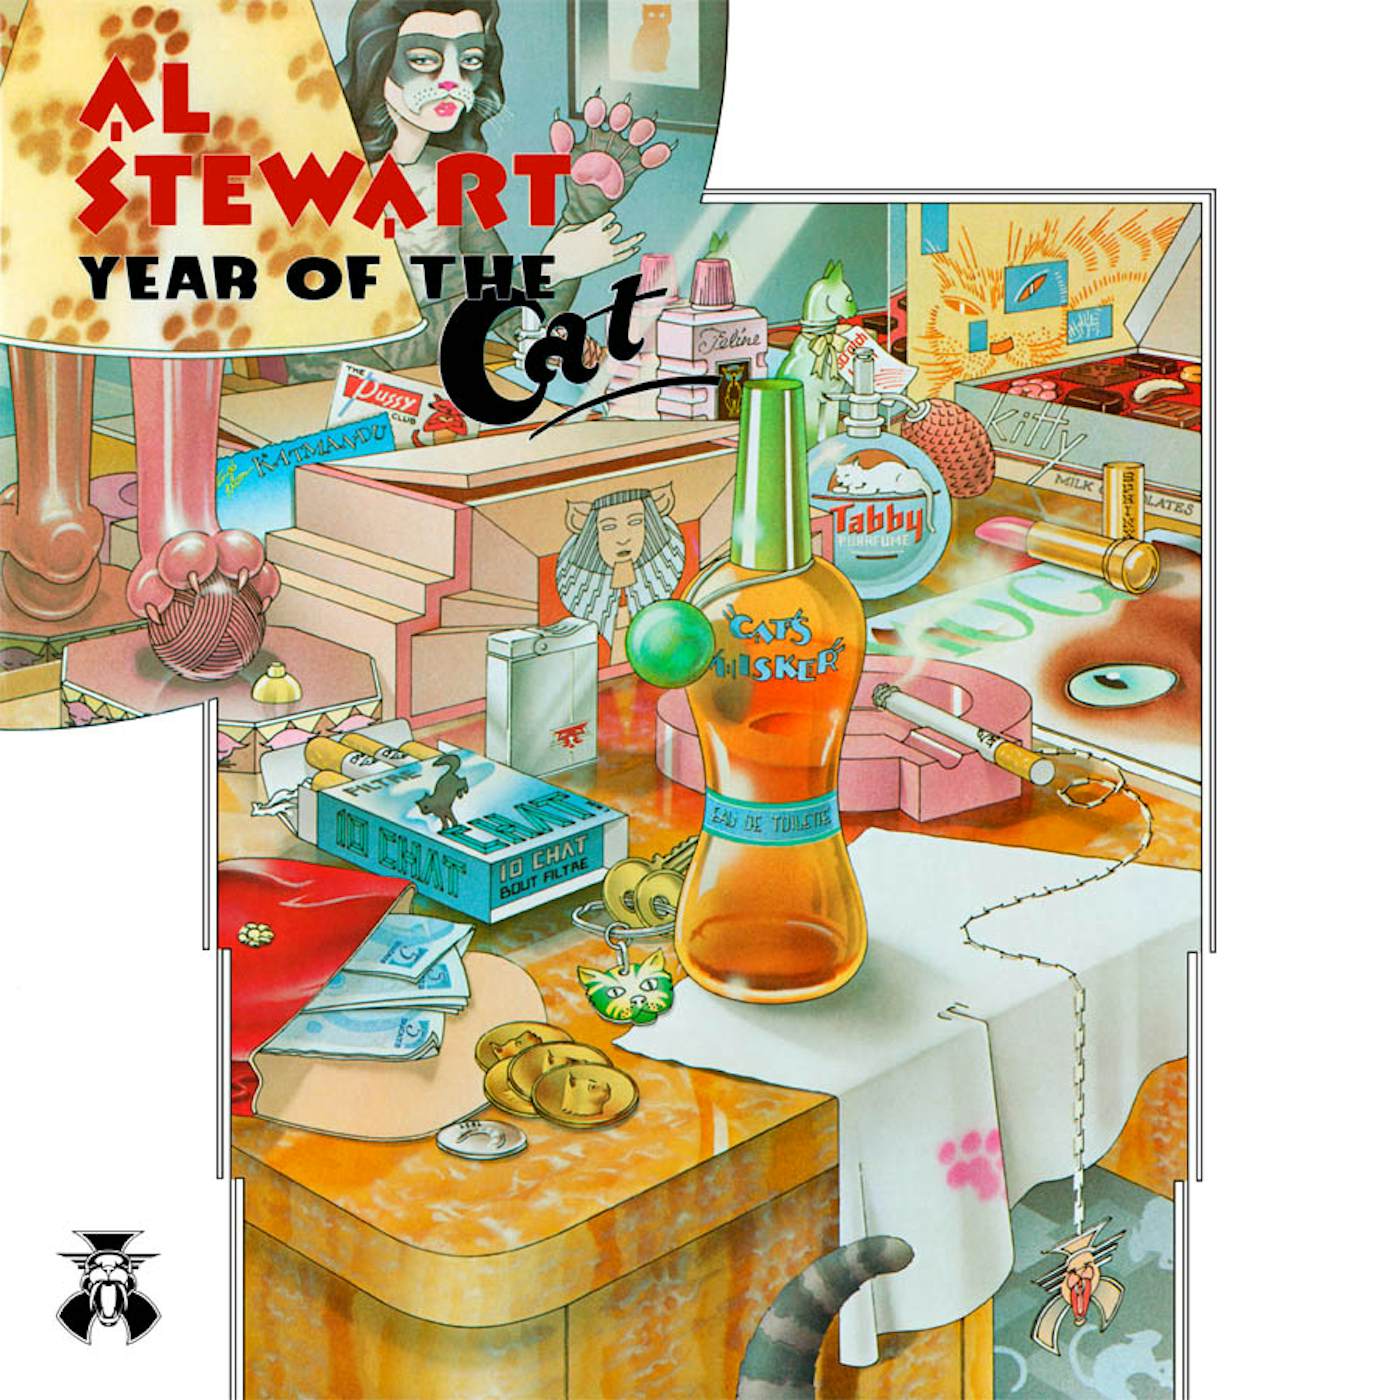 Al Stewart Year Of The Cat Vinyl Record